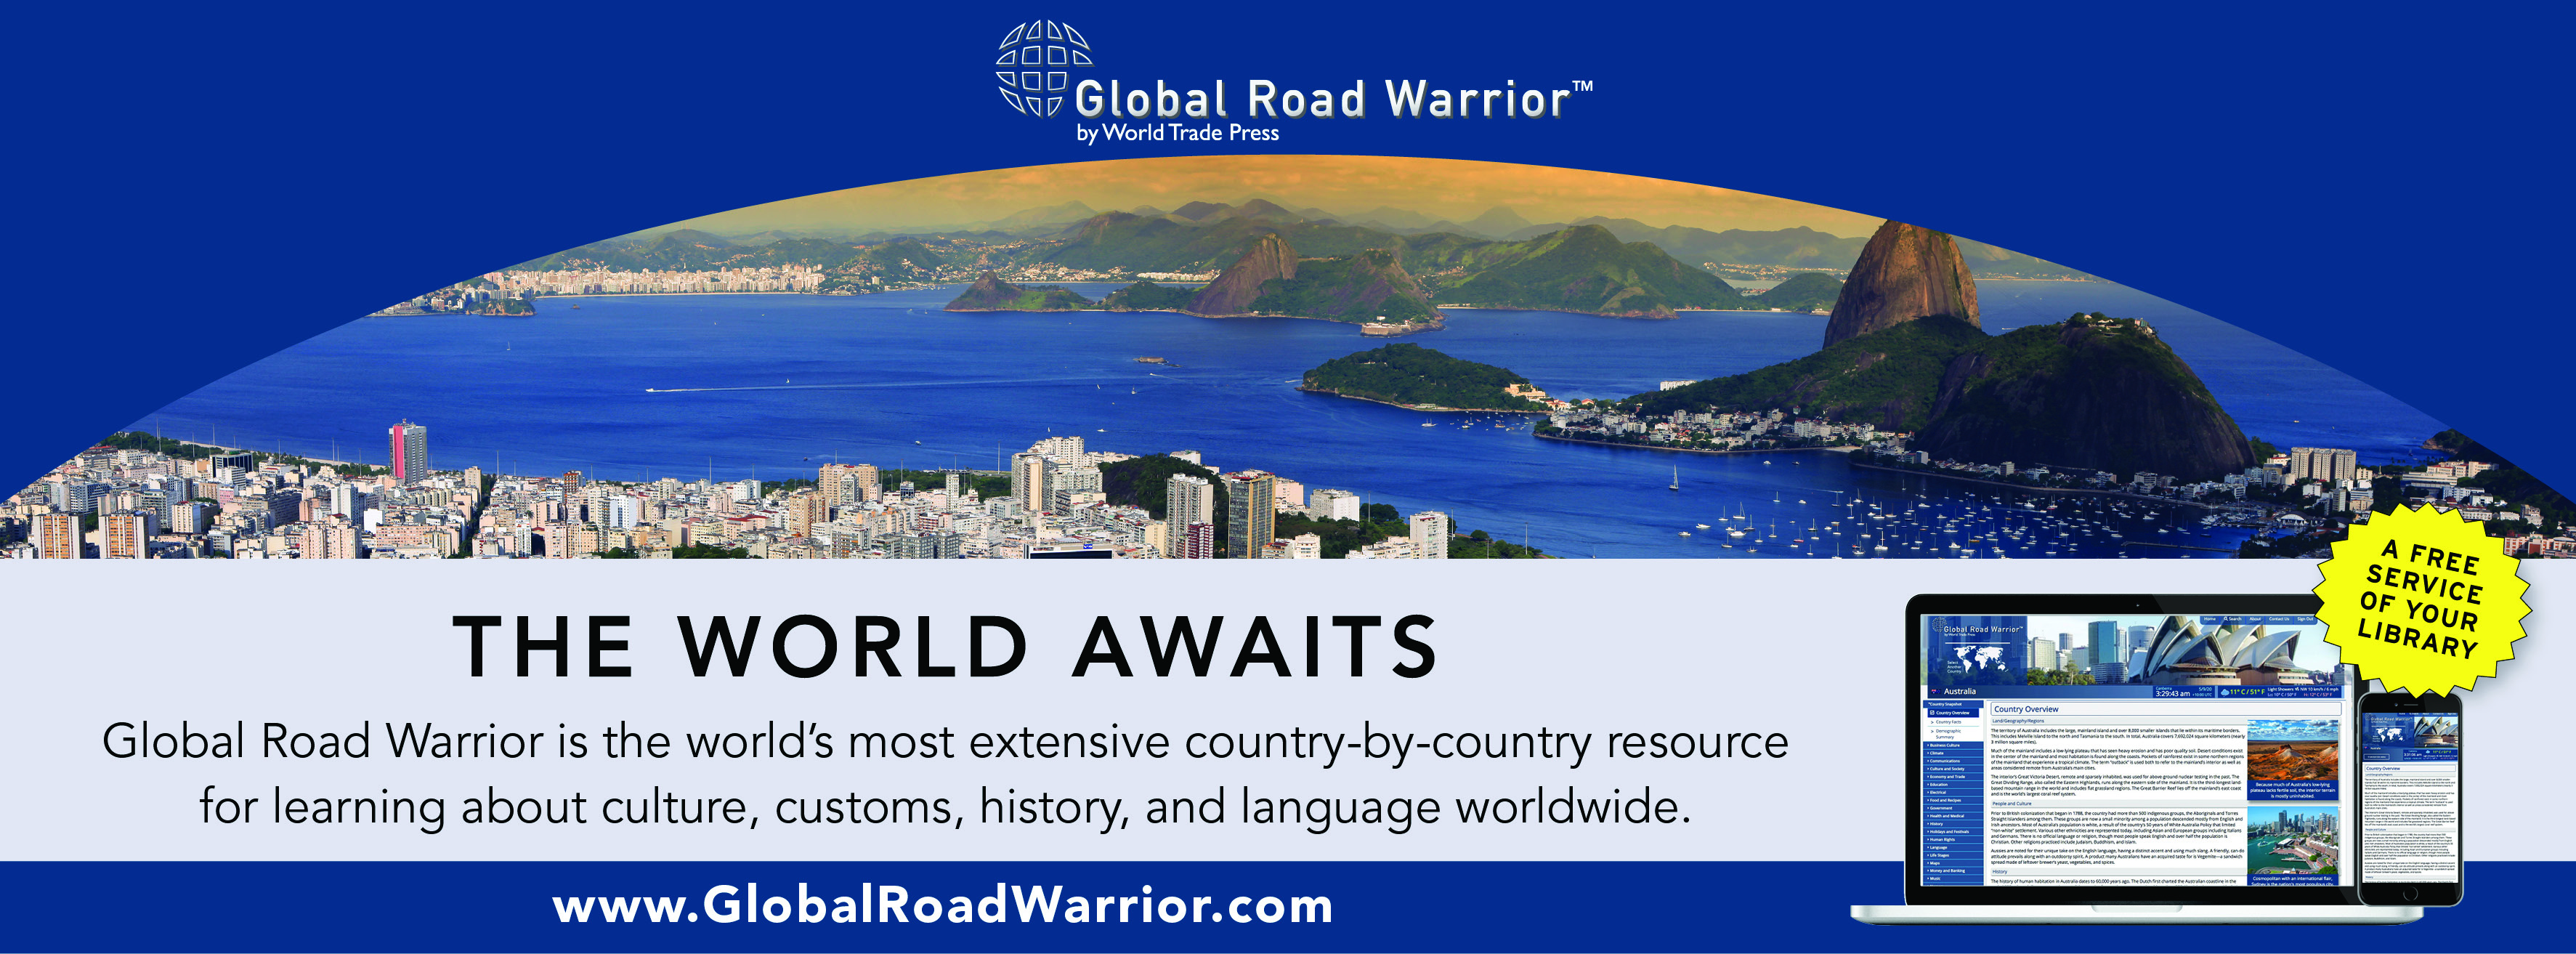 GlobalRoadWarrior_world.jpg